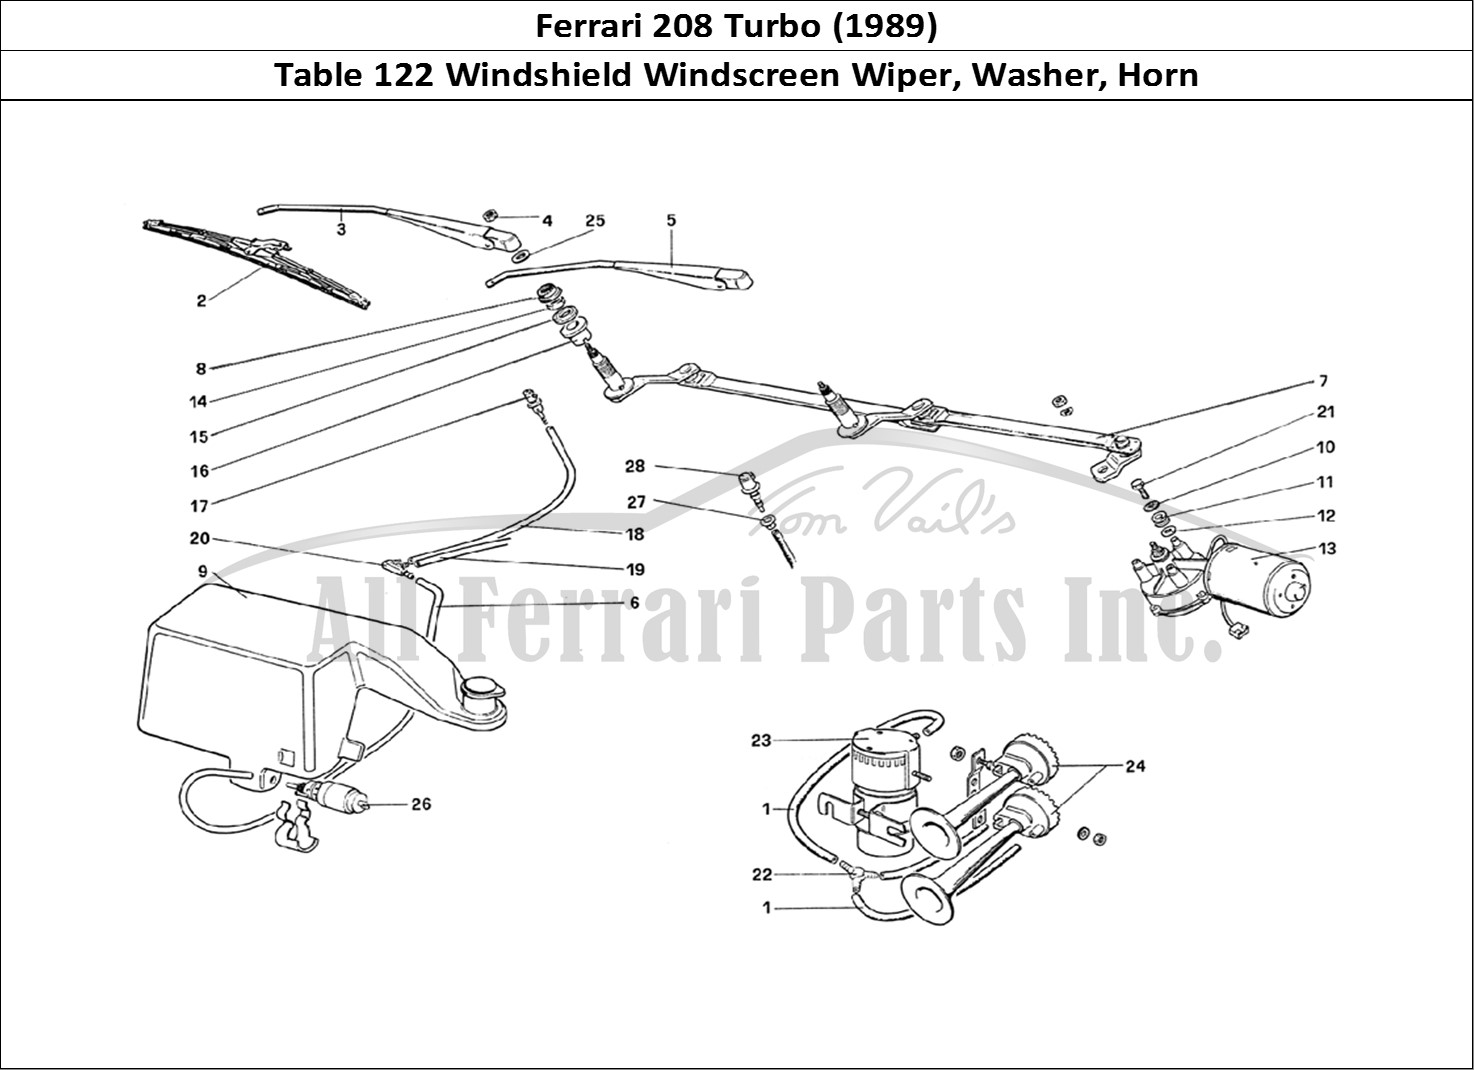 Ferrari Parts Ferrari 208 Turbo (1989) Page 122 Windshield Wiper, Washer